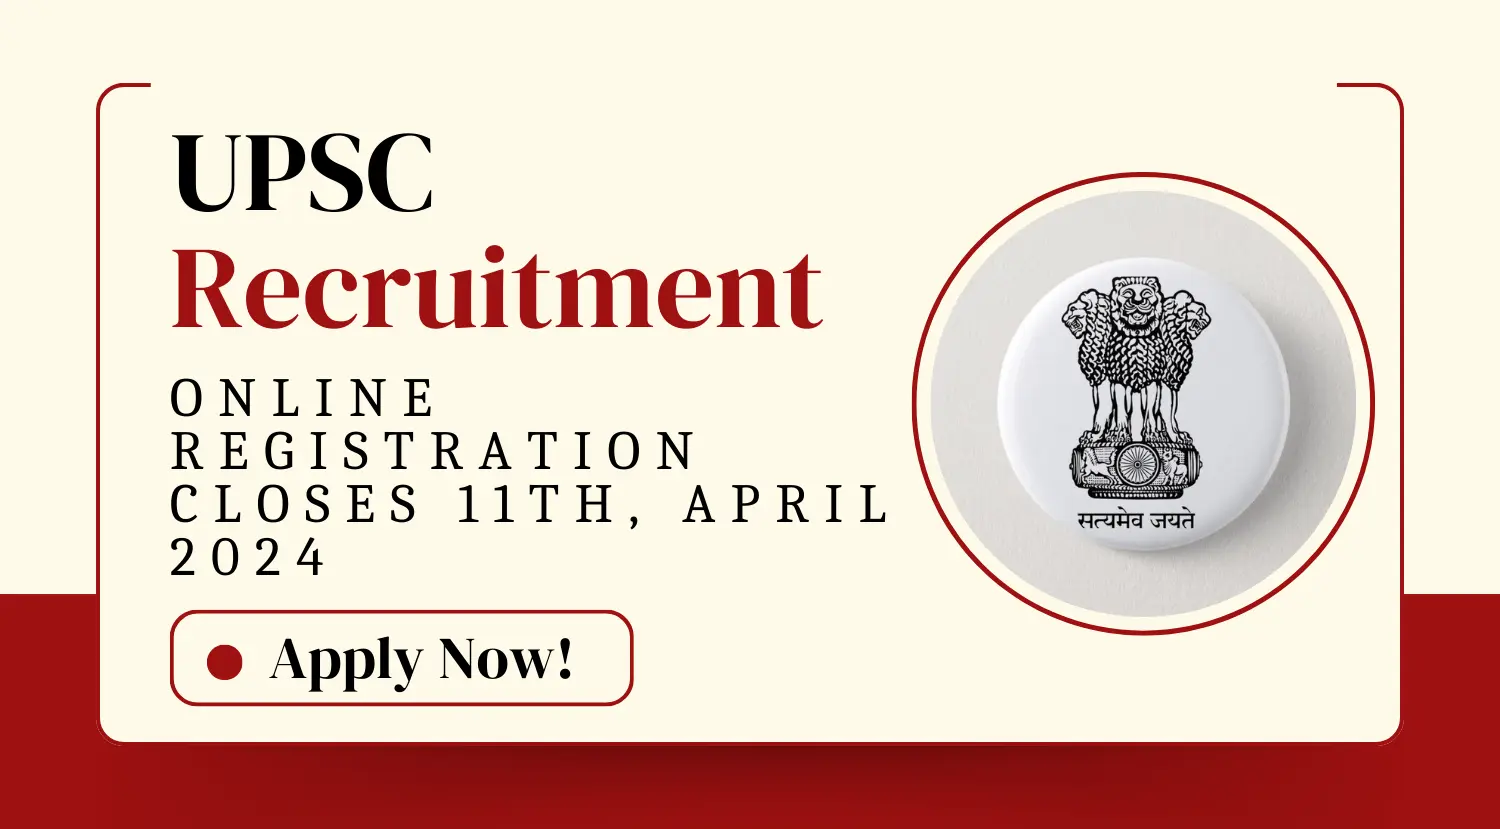 UPSC Recruitment 2024 online registration closes April 11 Apply Now